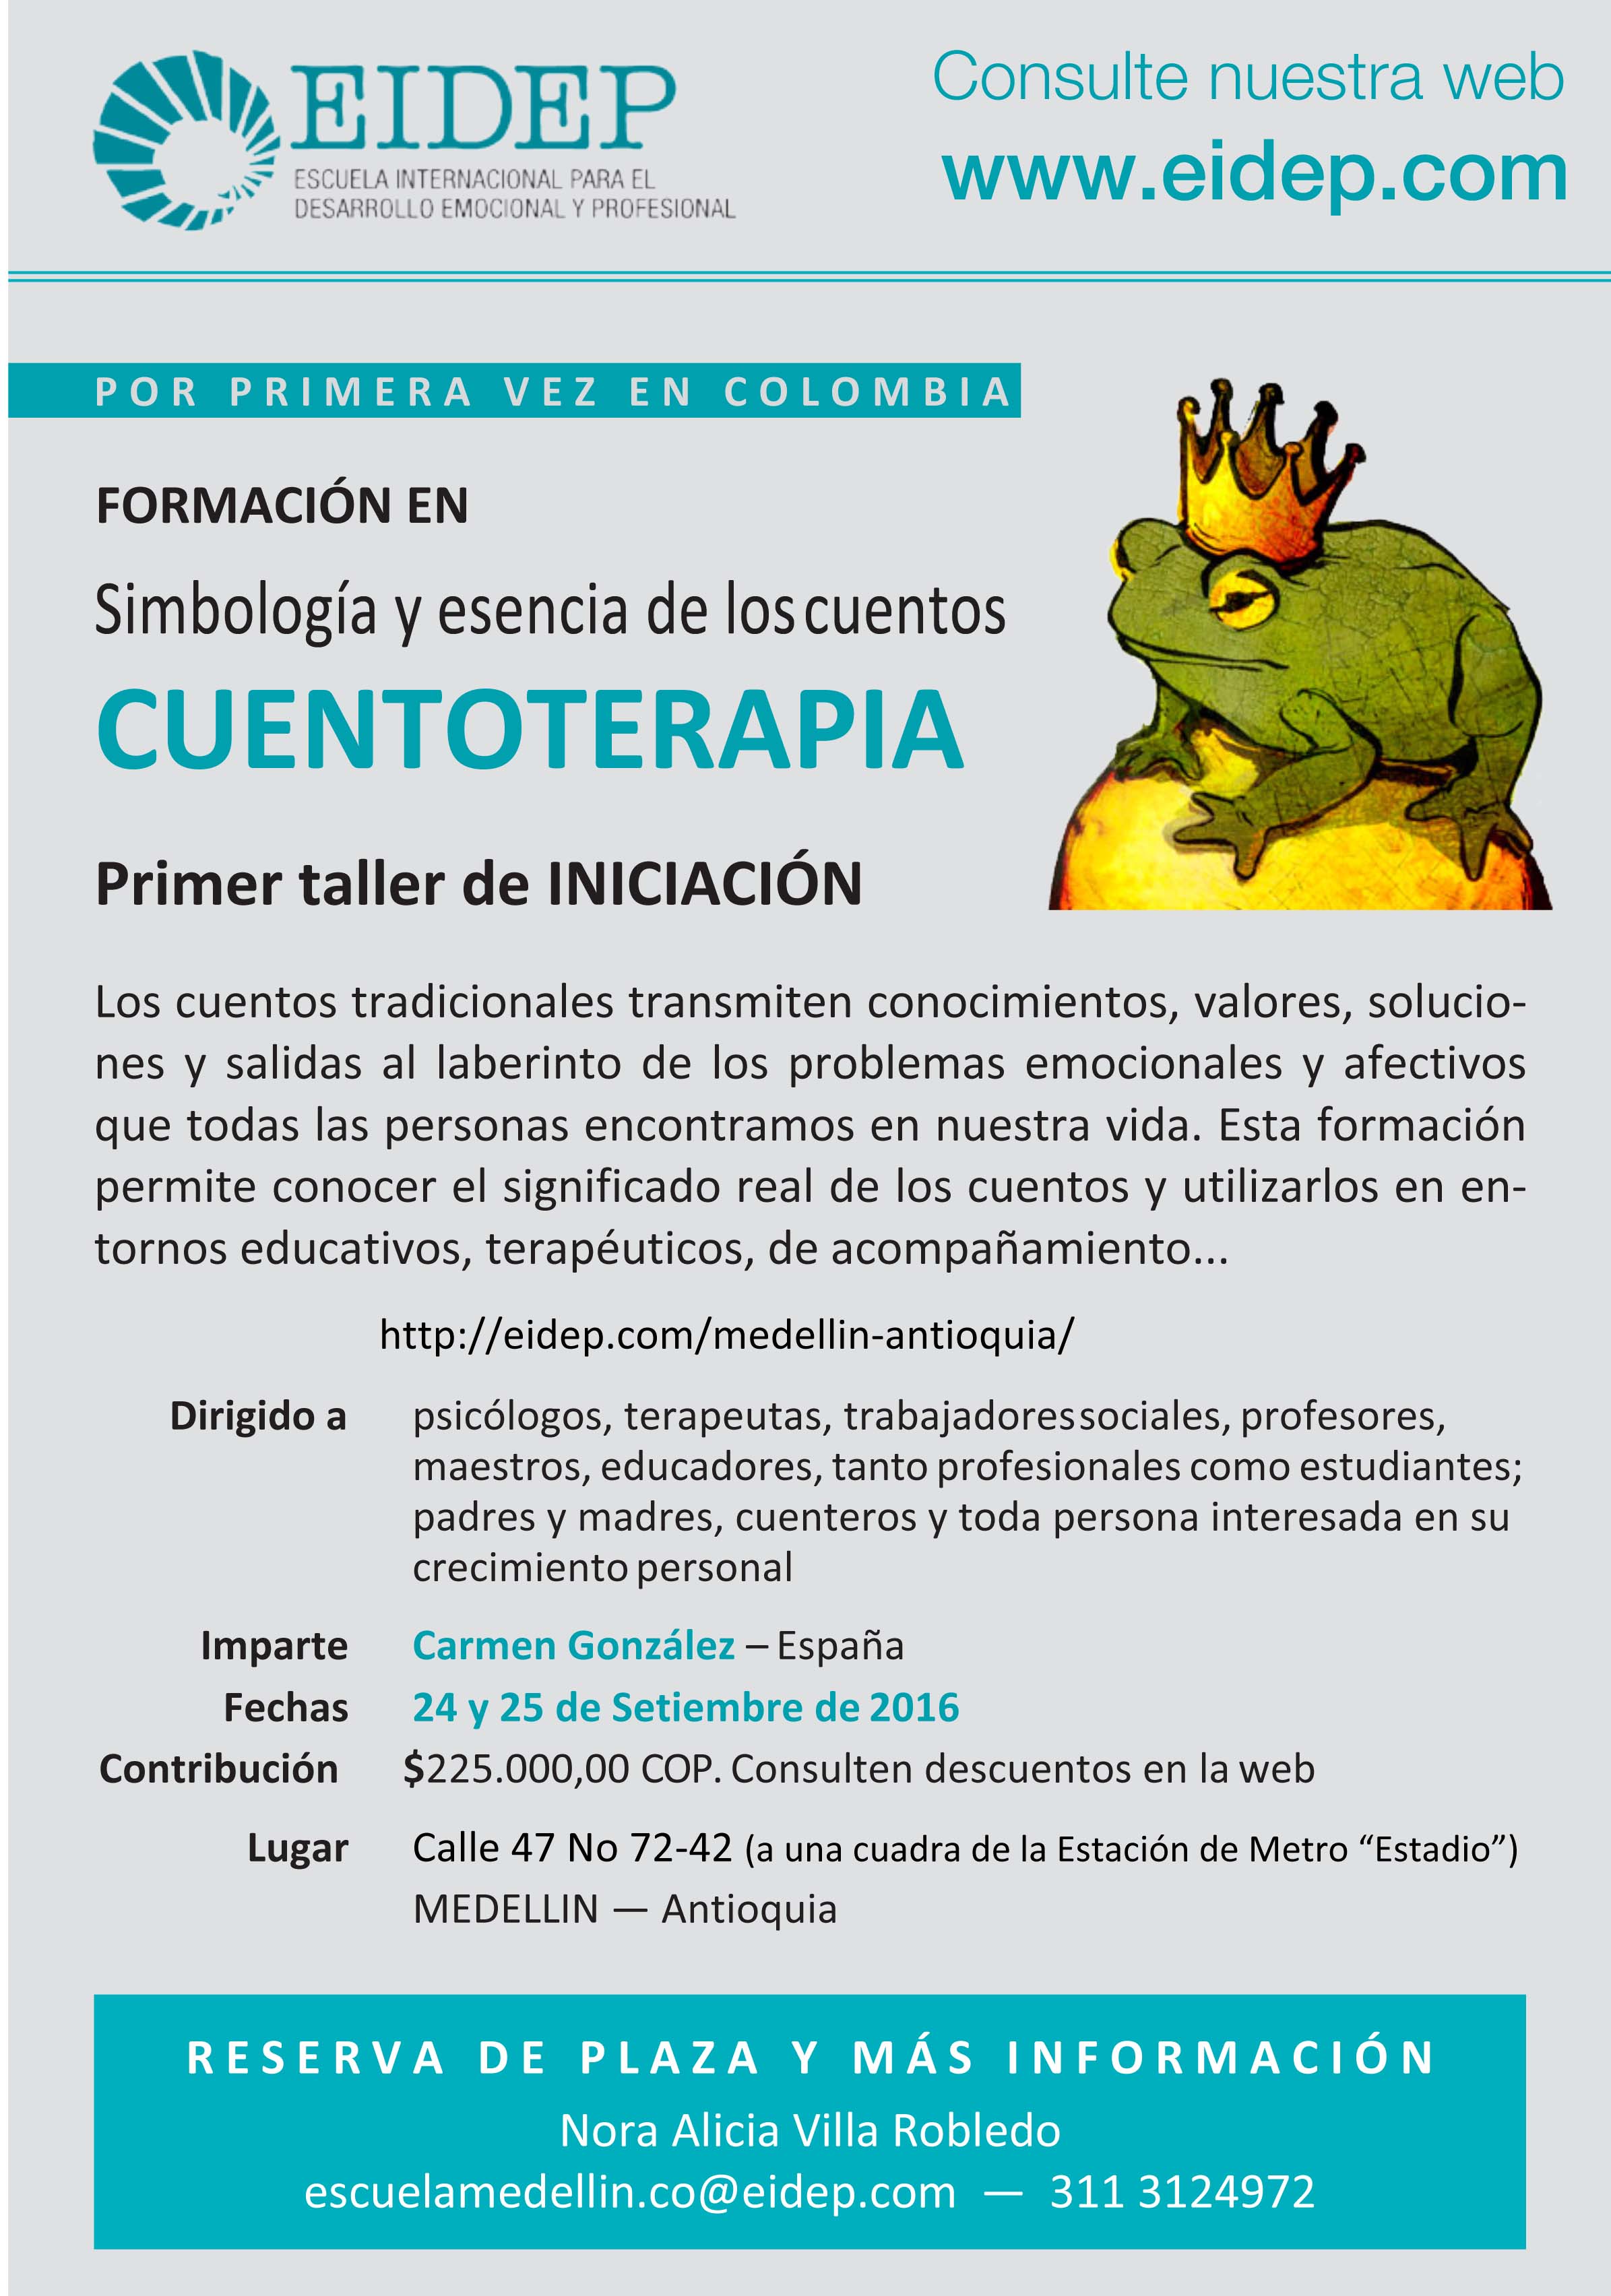 Microsoft Word - 4_EIDEP_cuentoterapia_Medellin.docx